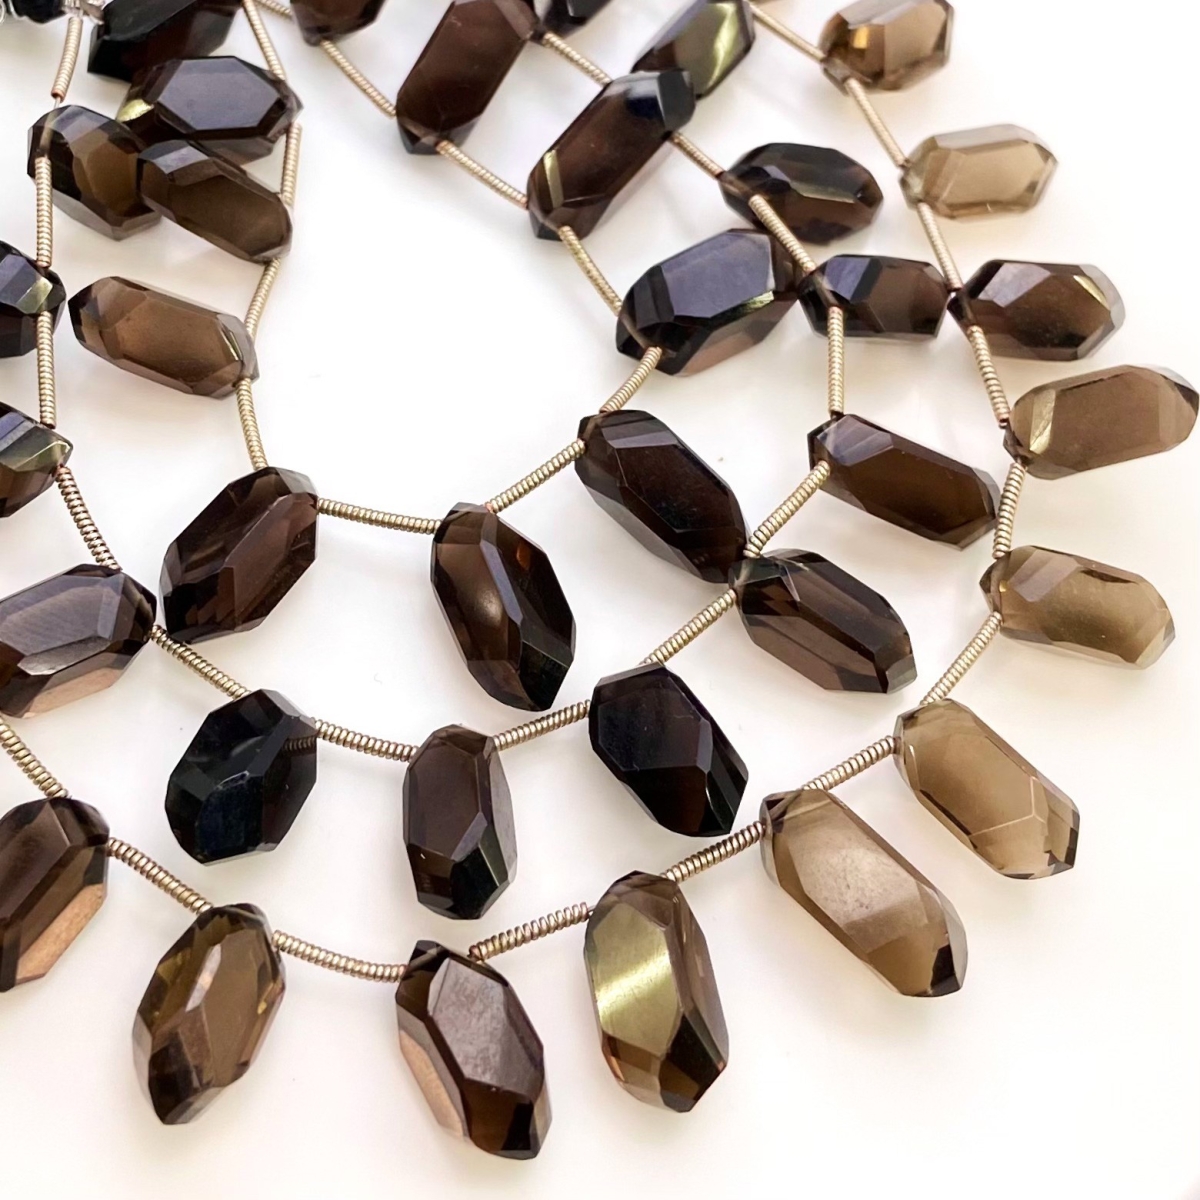 Know The Different Cuts of Gemstone Beads - GemsBiz